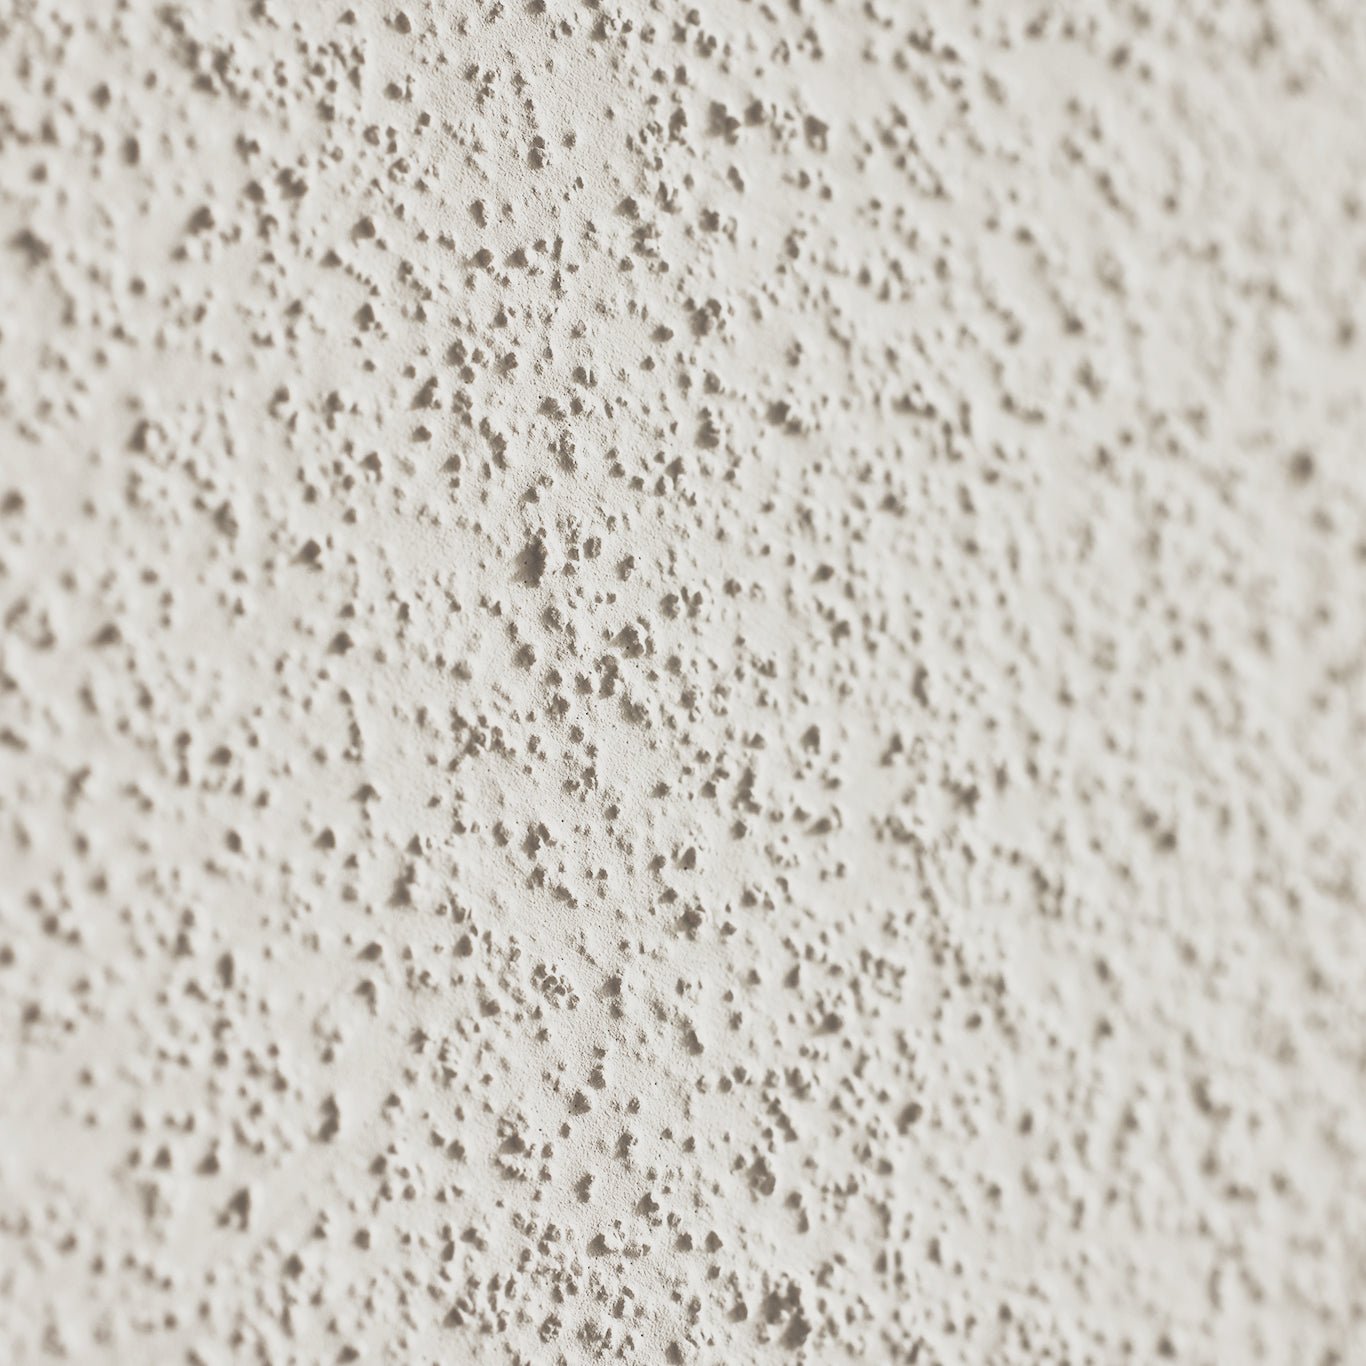 Blossom wall scrub - SHADES by Eric Kuster